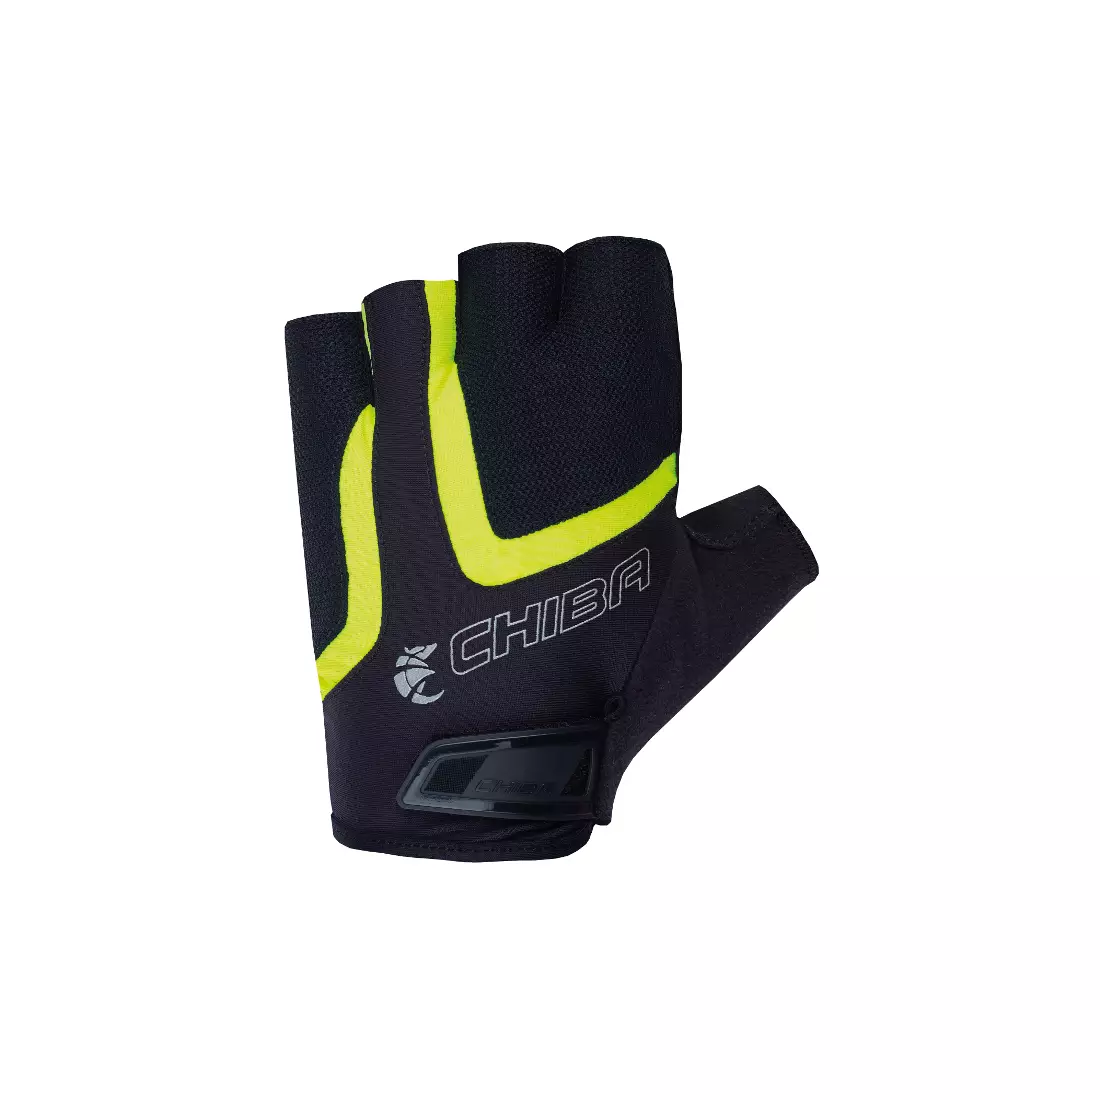 CHIBA pánské cyklistické rukavice GEL AIR, black-fluo 3010018 